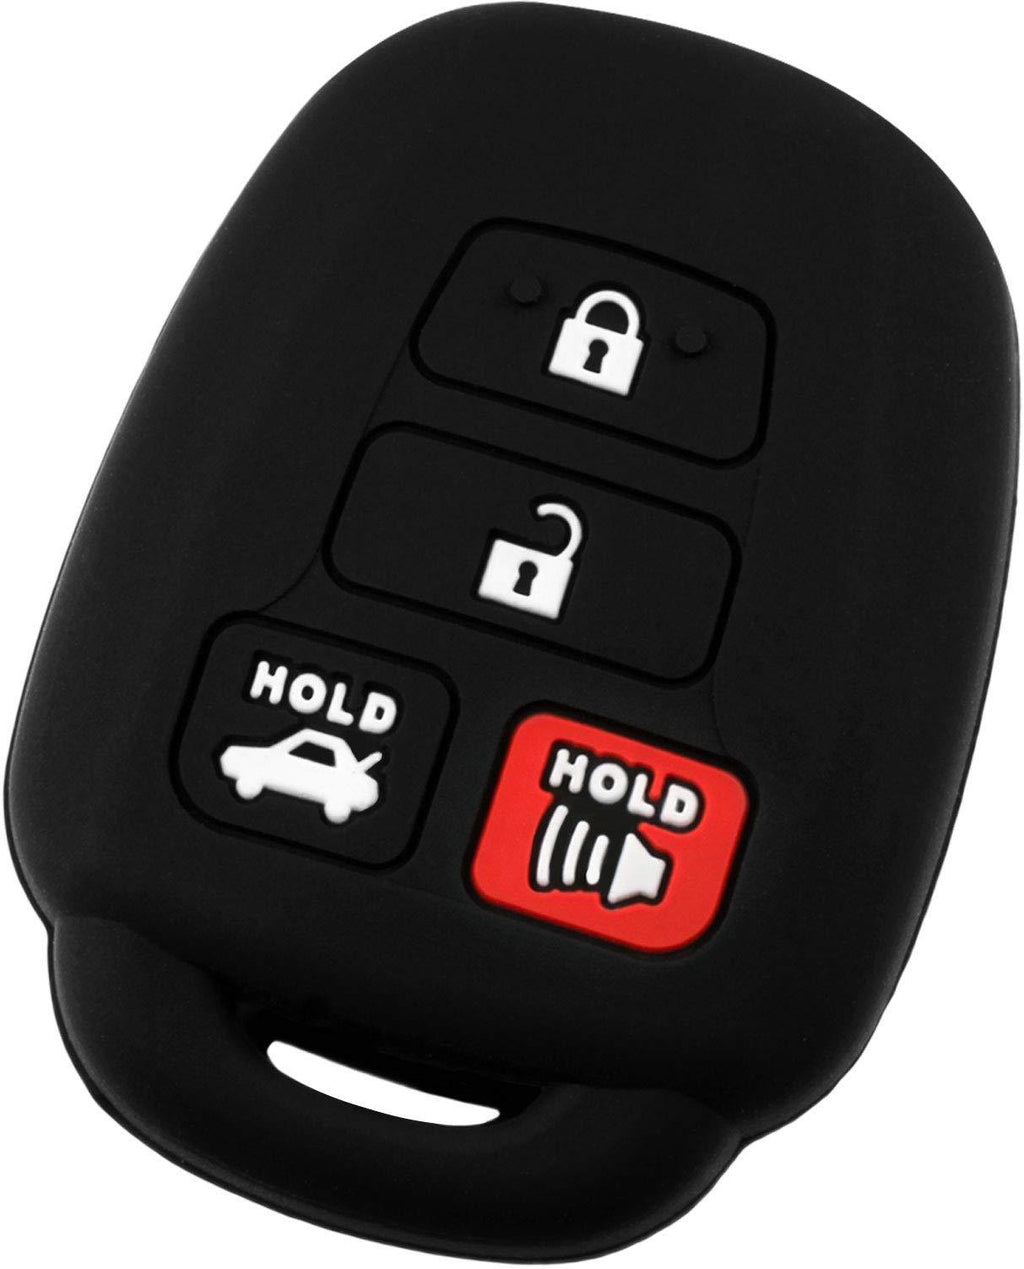  [AUSTRALIA] - KeyGuardz Keyless Entry Remote Car Key Fob Outer Shell Cover Soft Rubber Protective Case for Toyota Camry Corolla Rav4 HYQ12BDM Black